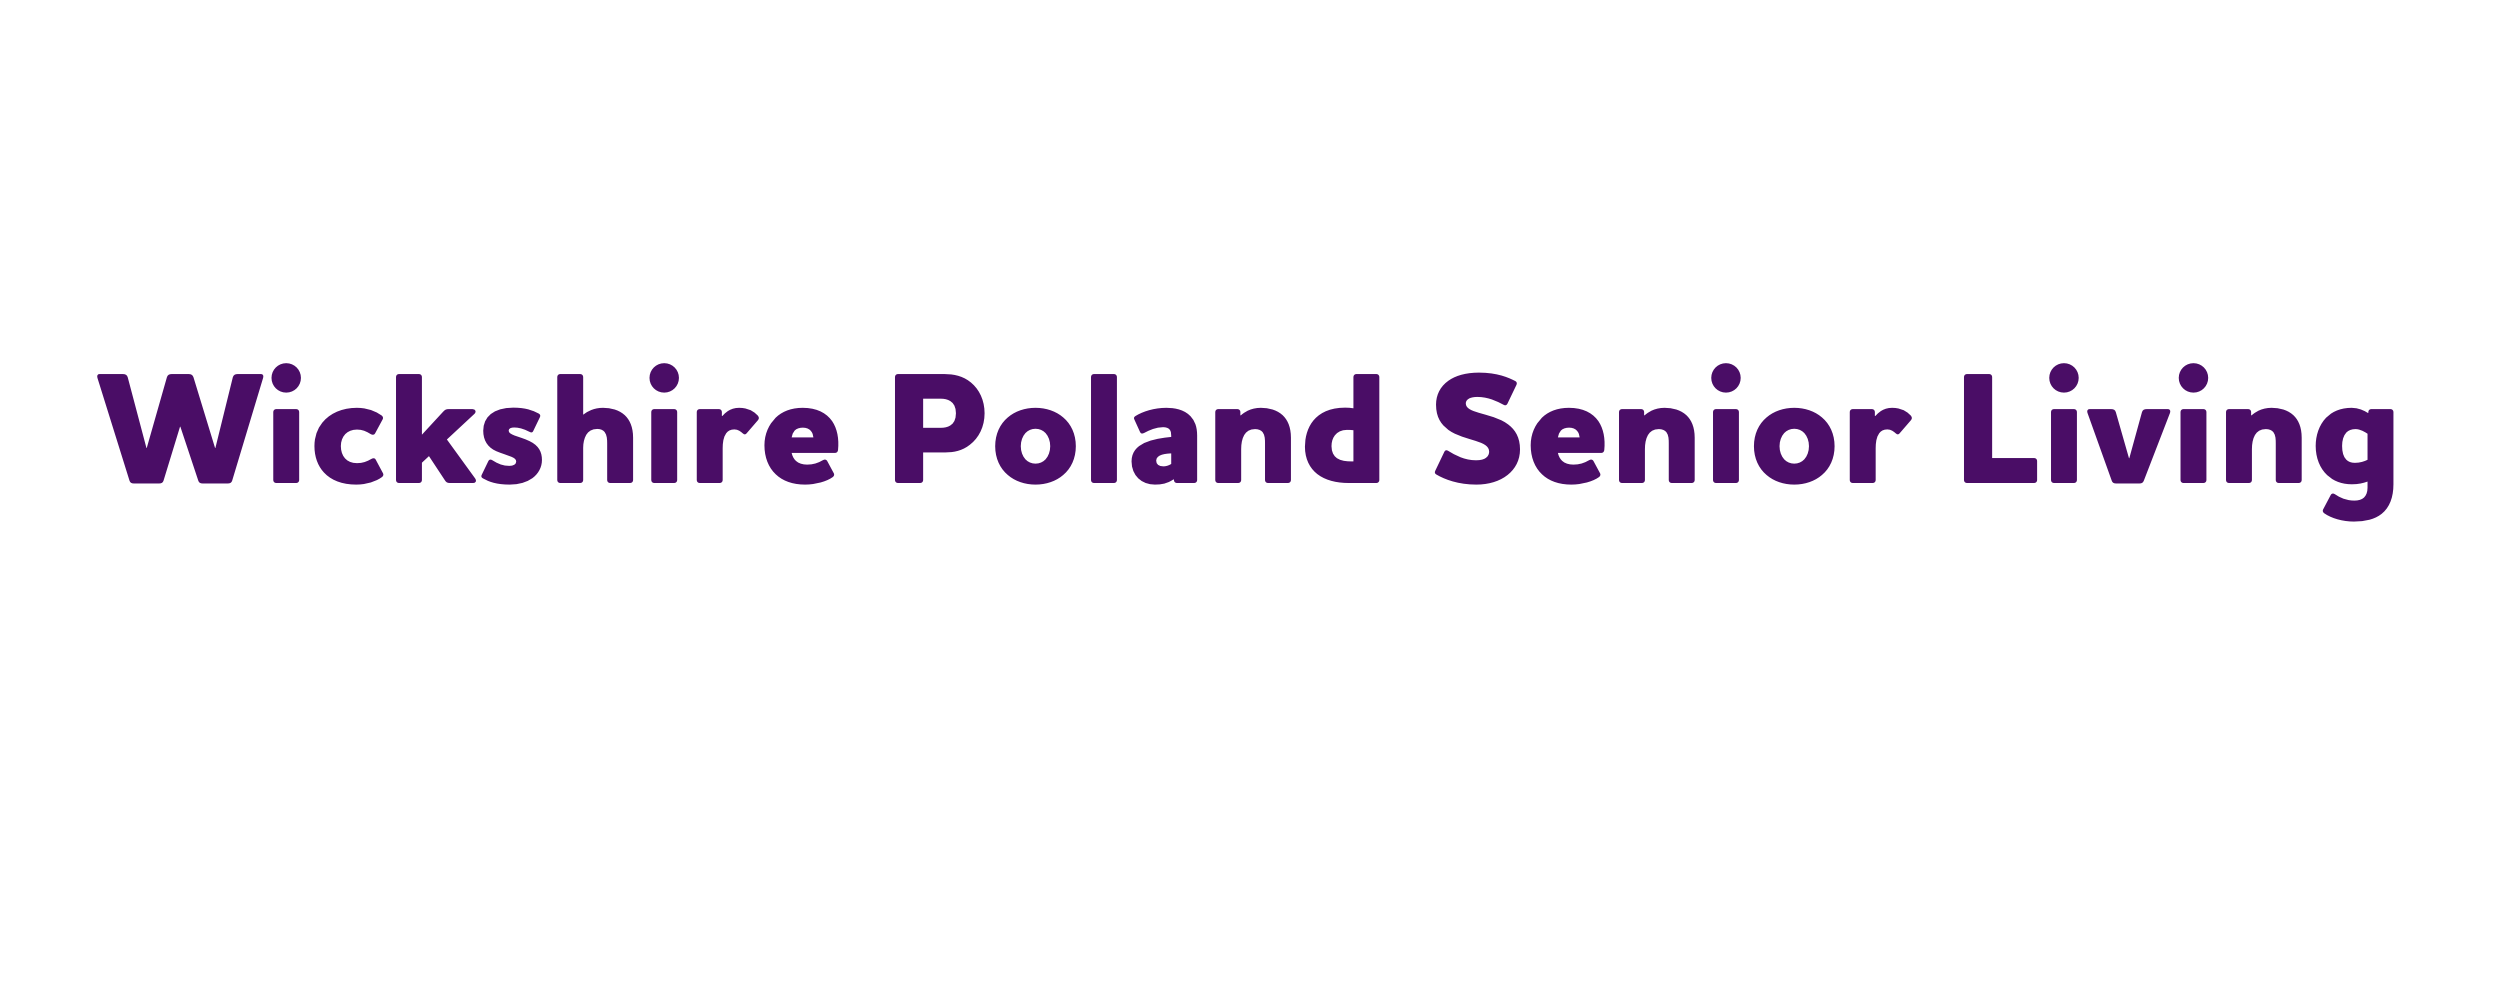 D. Wickshire Poland Senior Living (Stride)